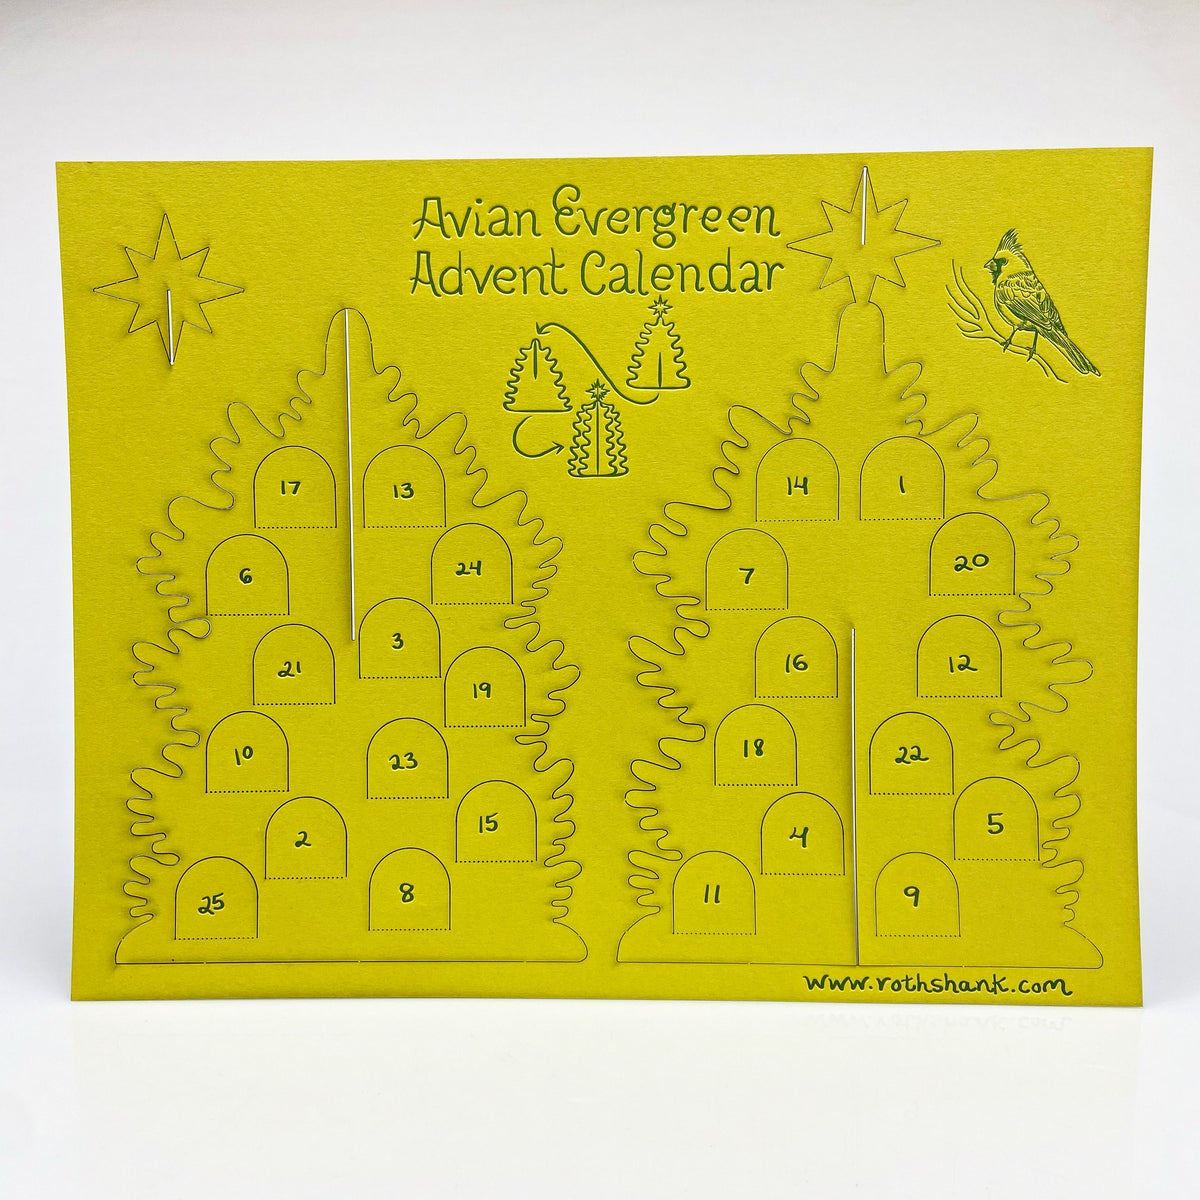 Avian Evergreen Advent Calendar rothshank